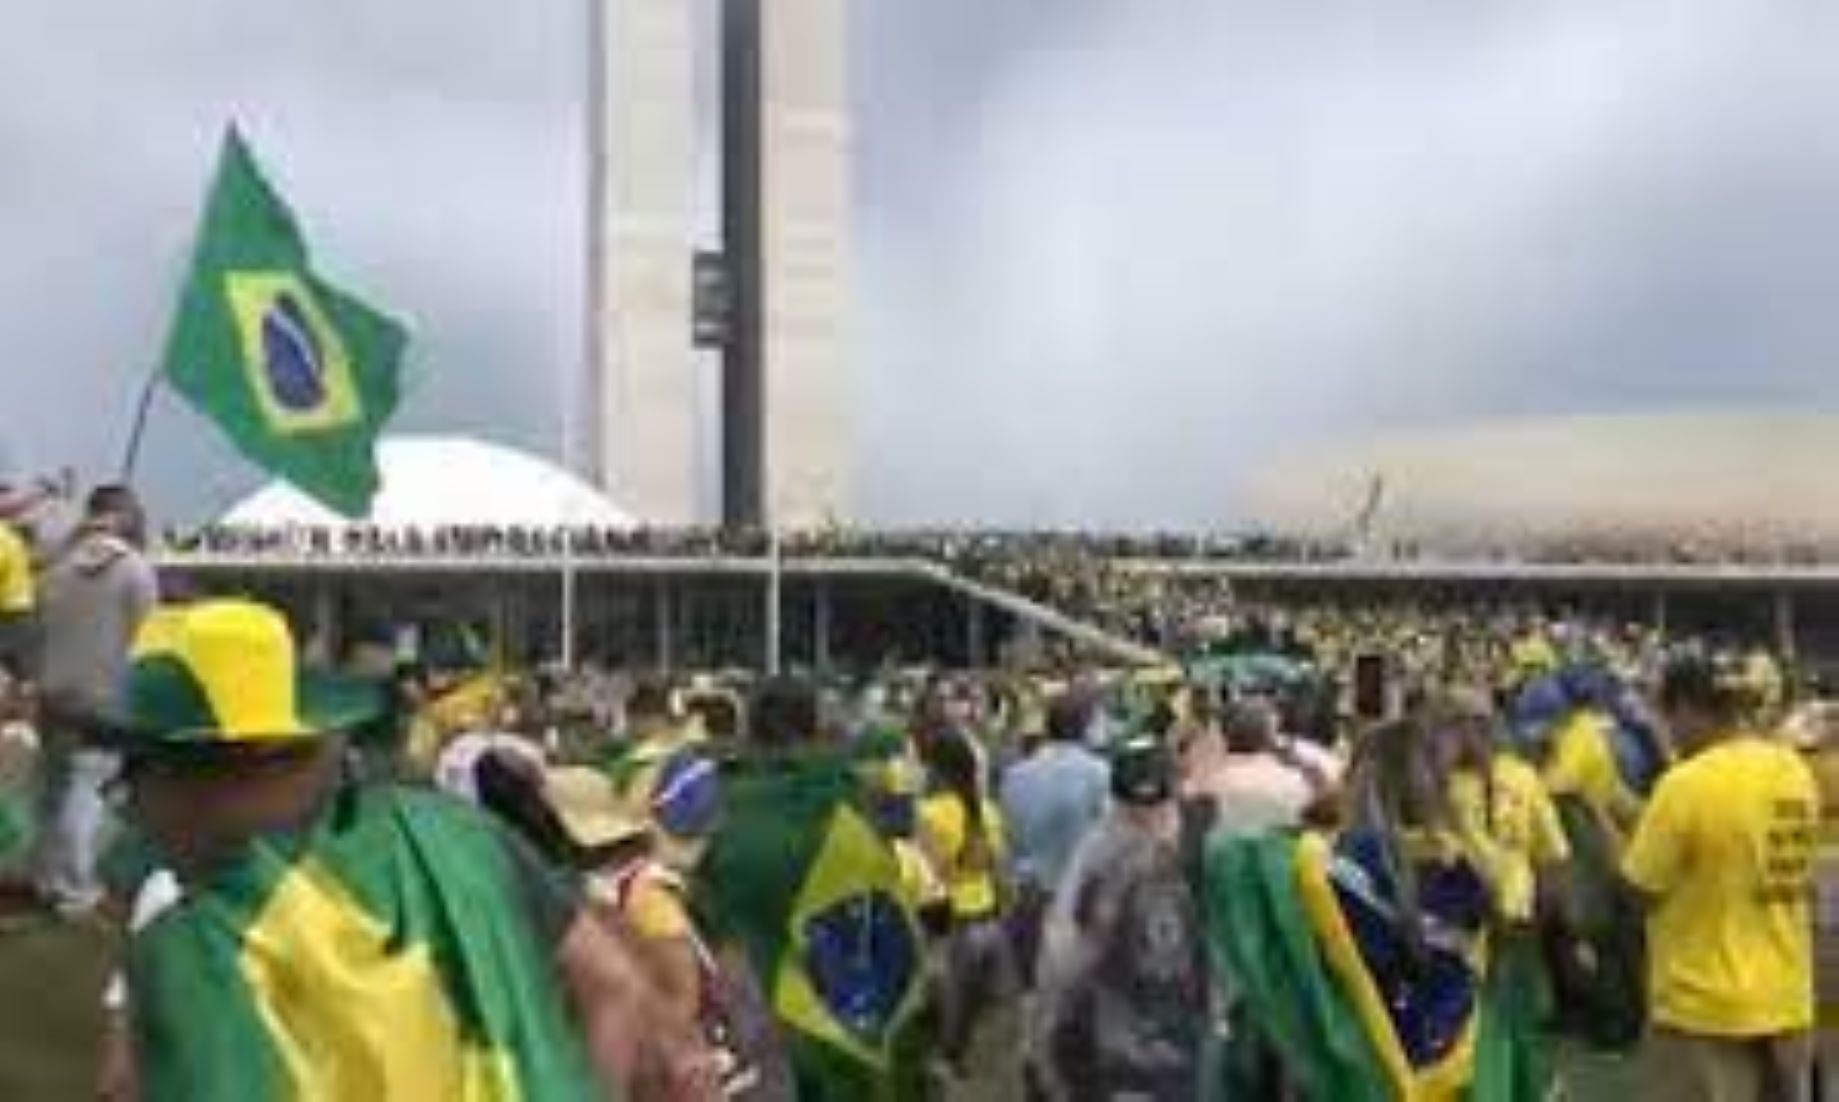 Portuguese Gov’t Condemned “Violent Actions” In Brazil